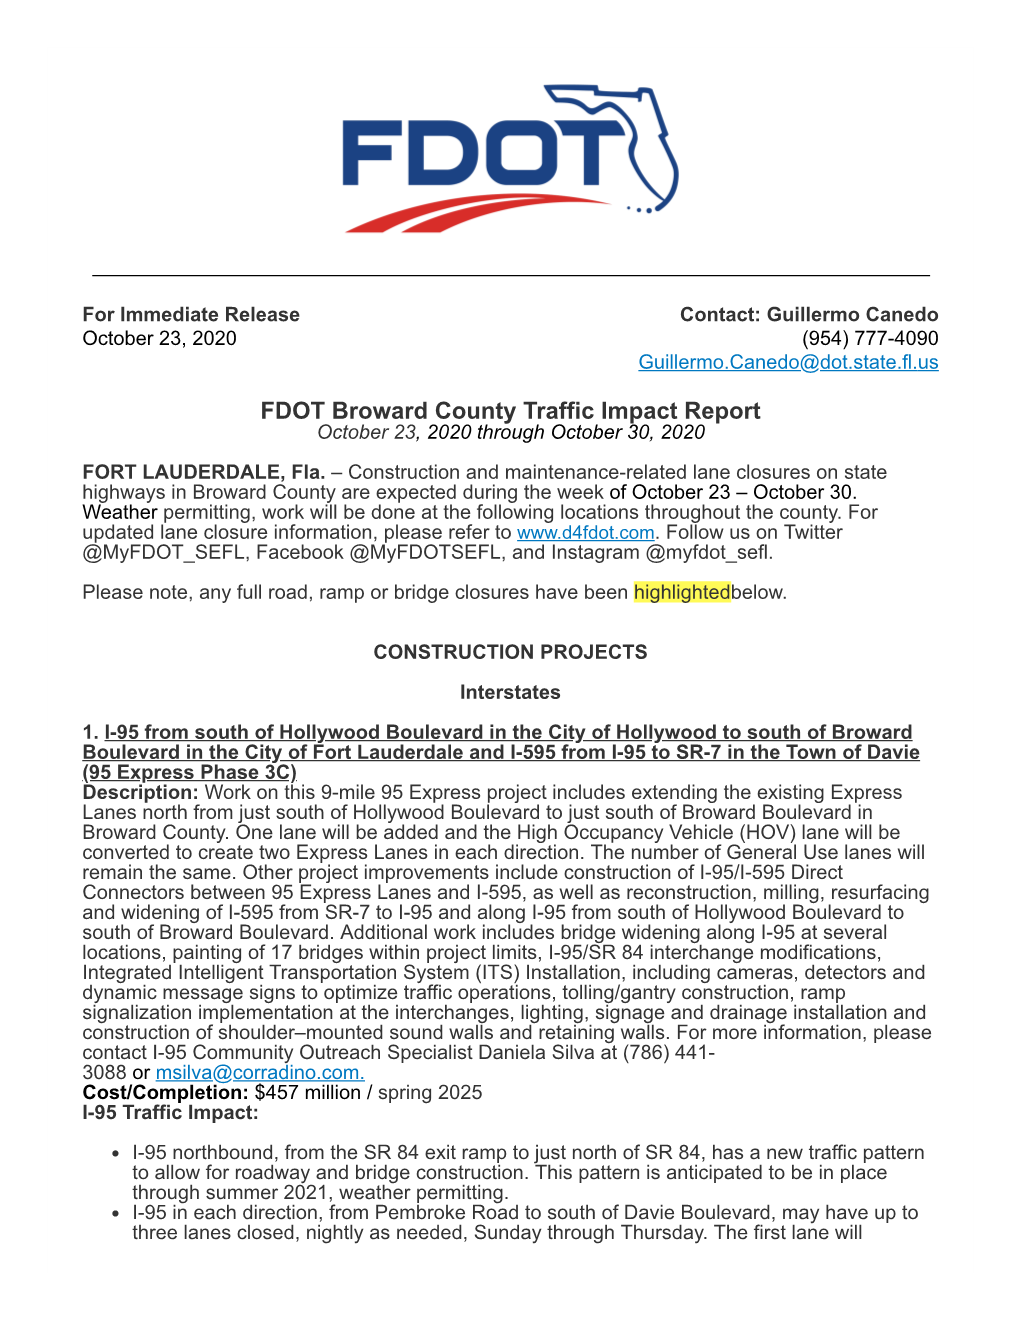 FDOT Broward County Traffic Impact Report October 23, 2020 Through October 30, 2020